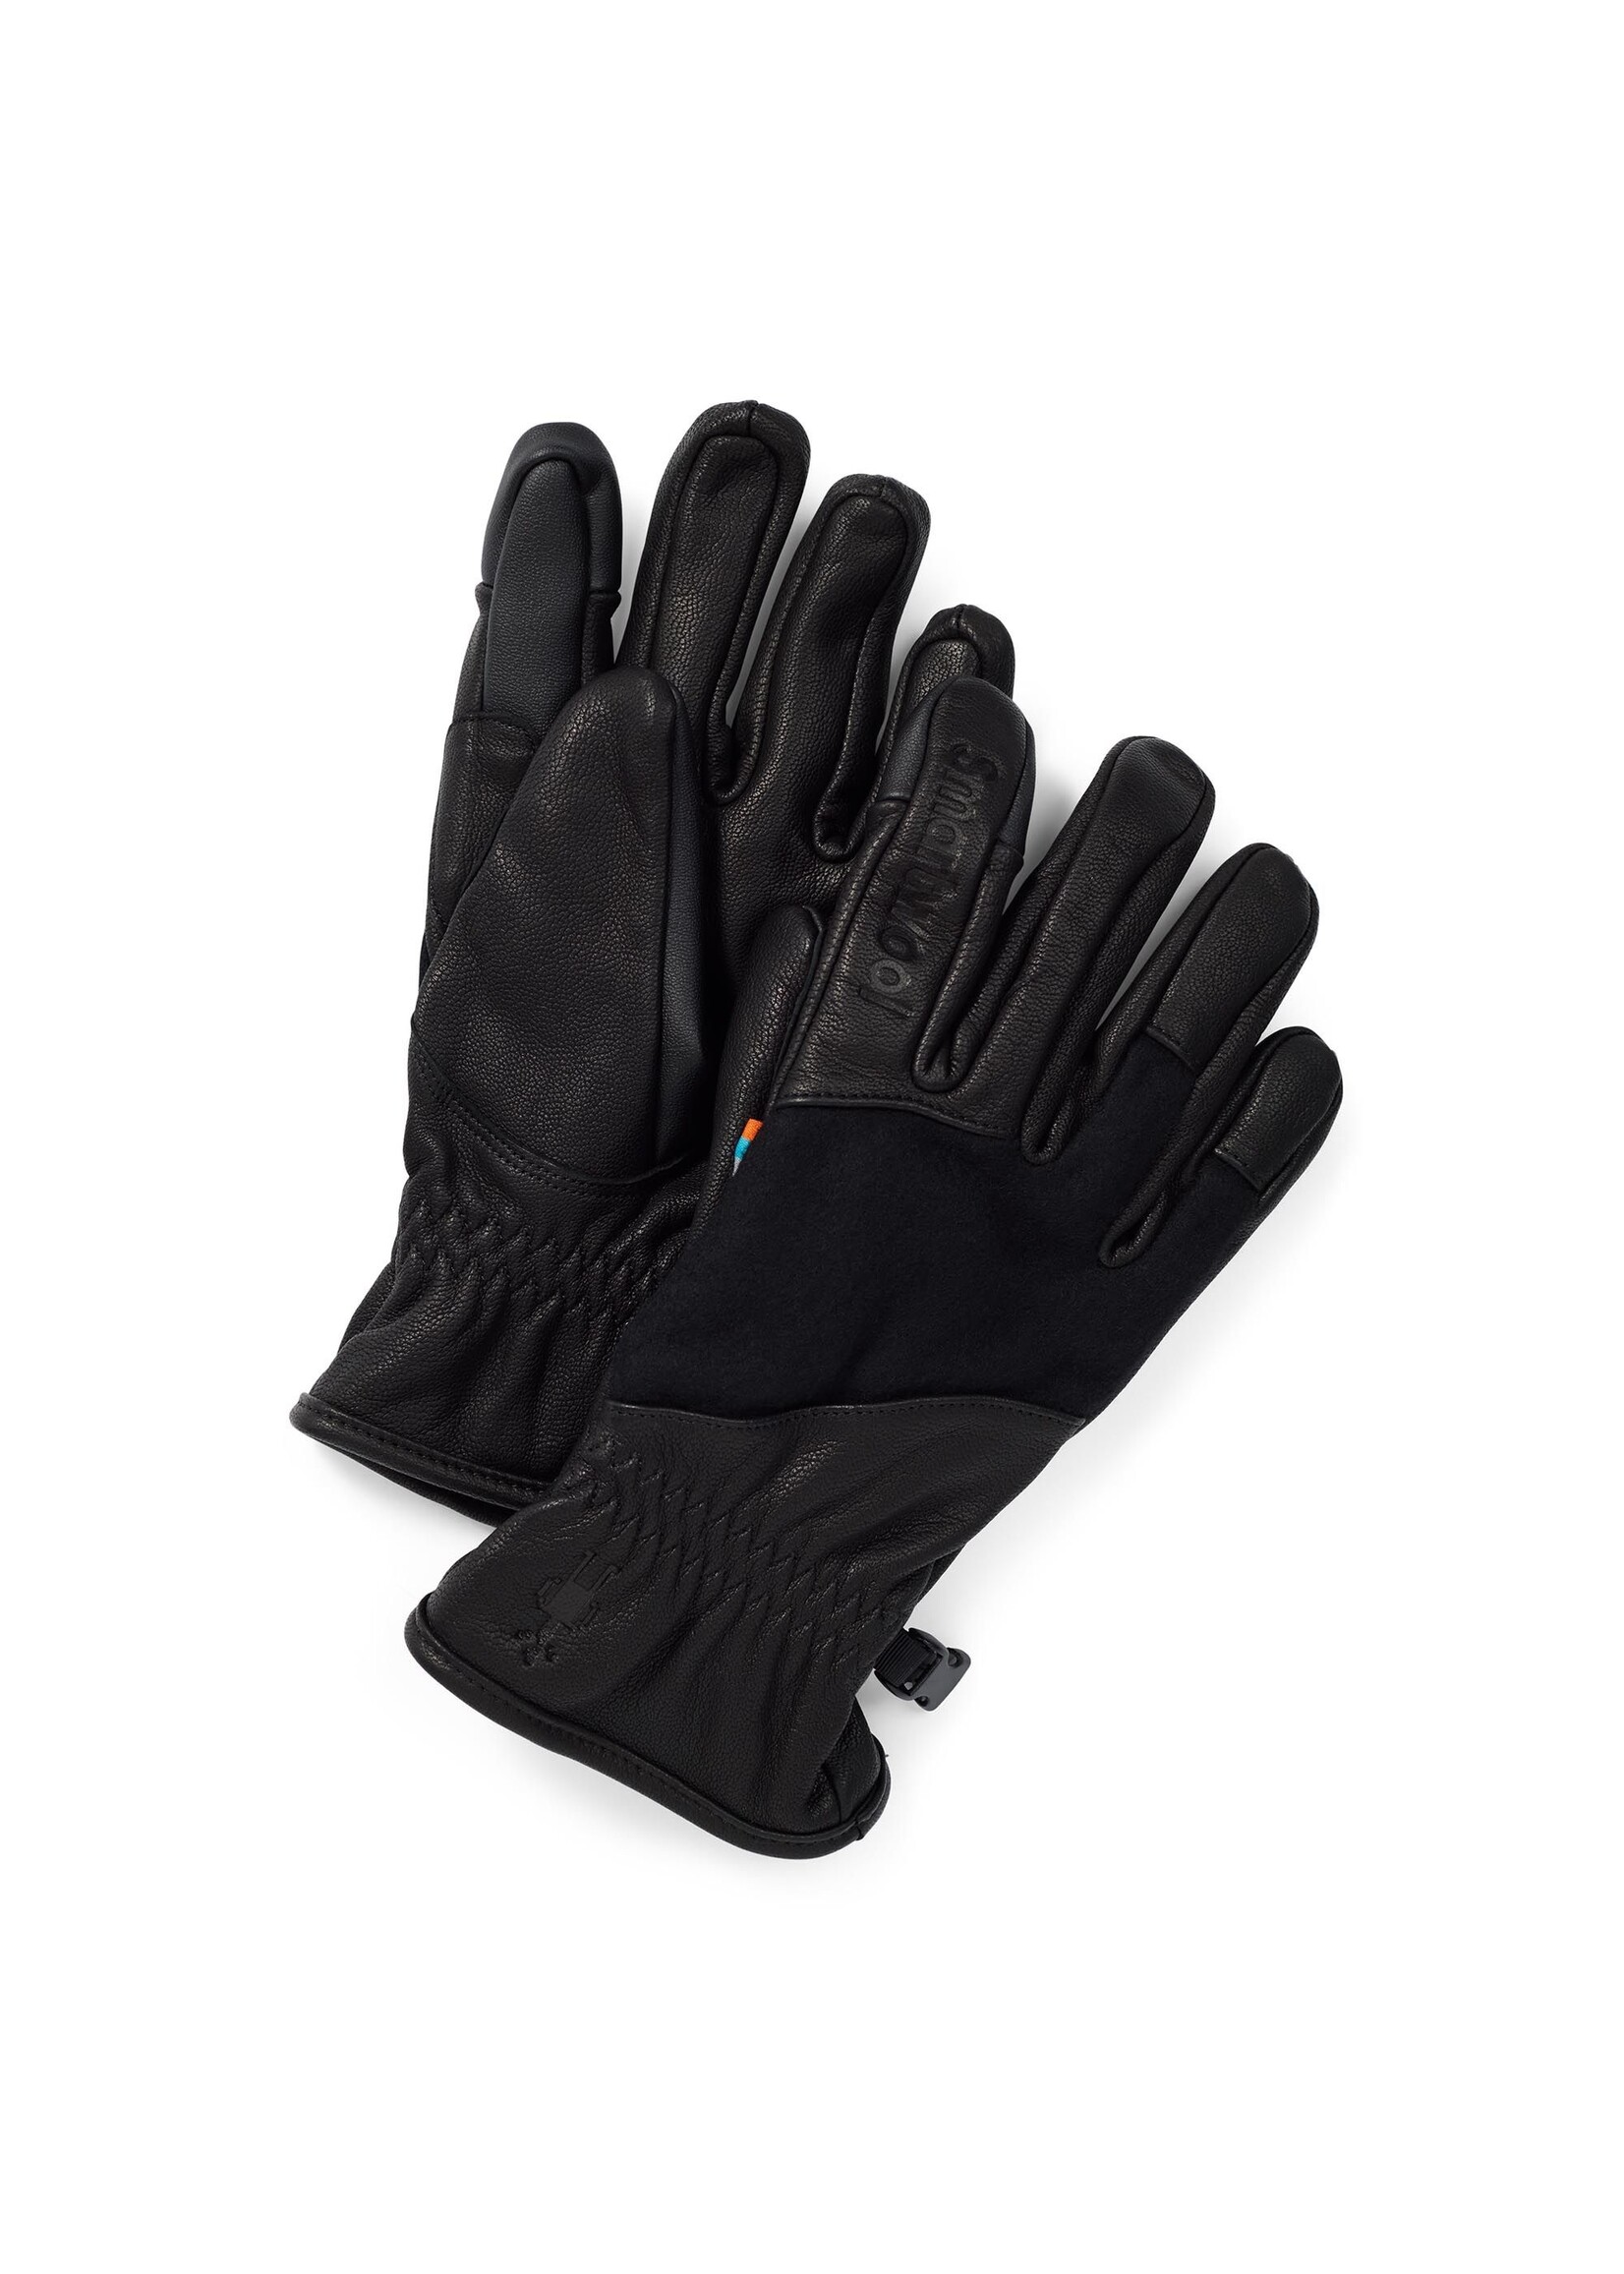 SMARTWOOL Ridgeway Glove-Black